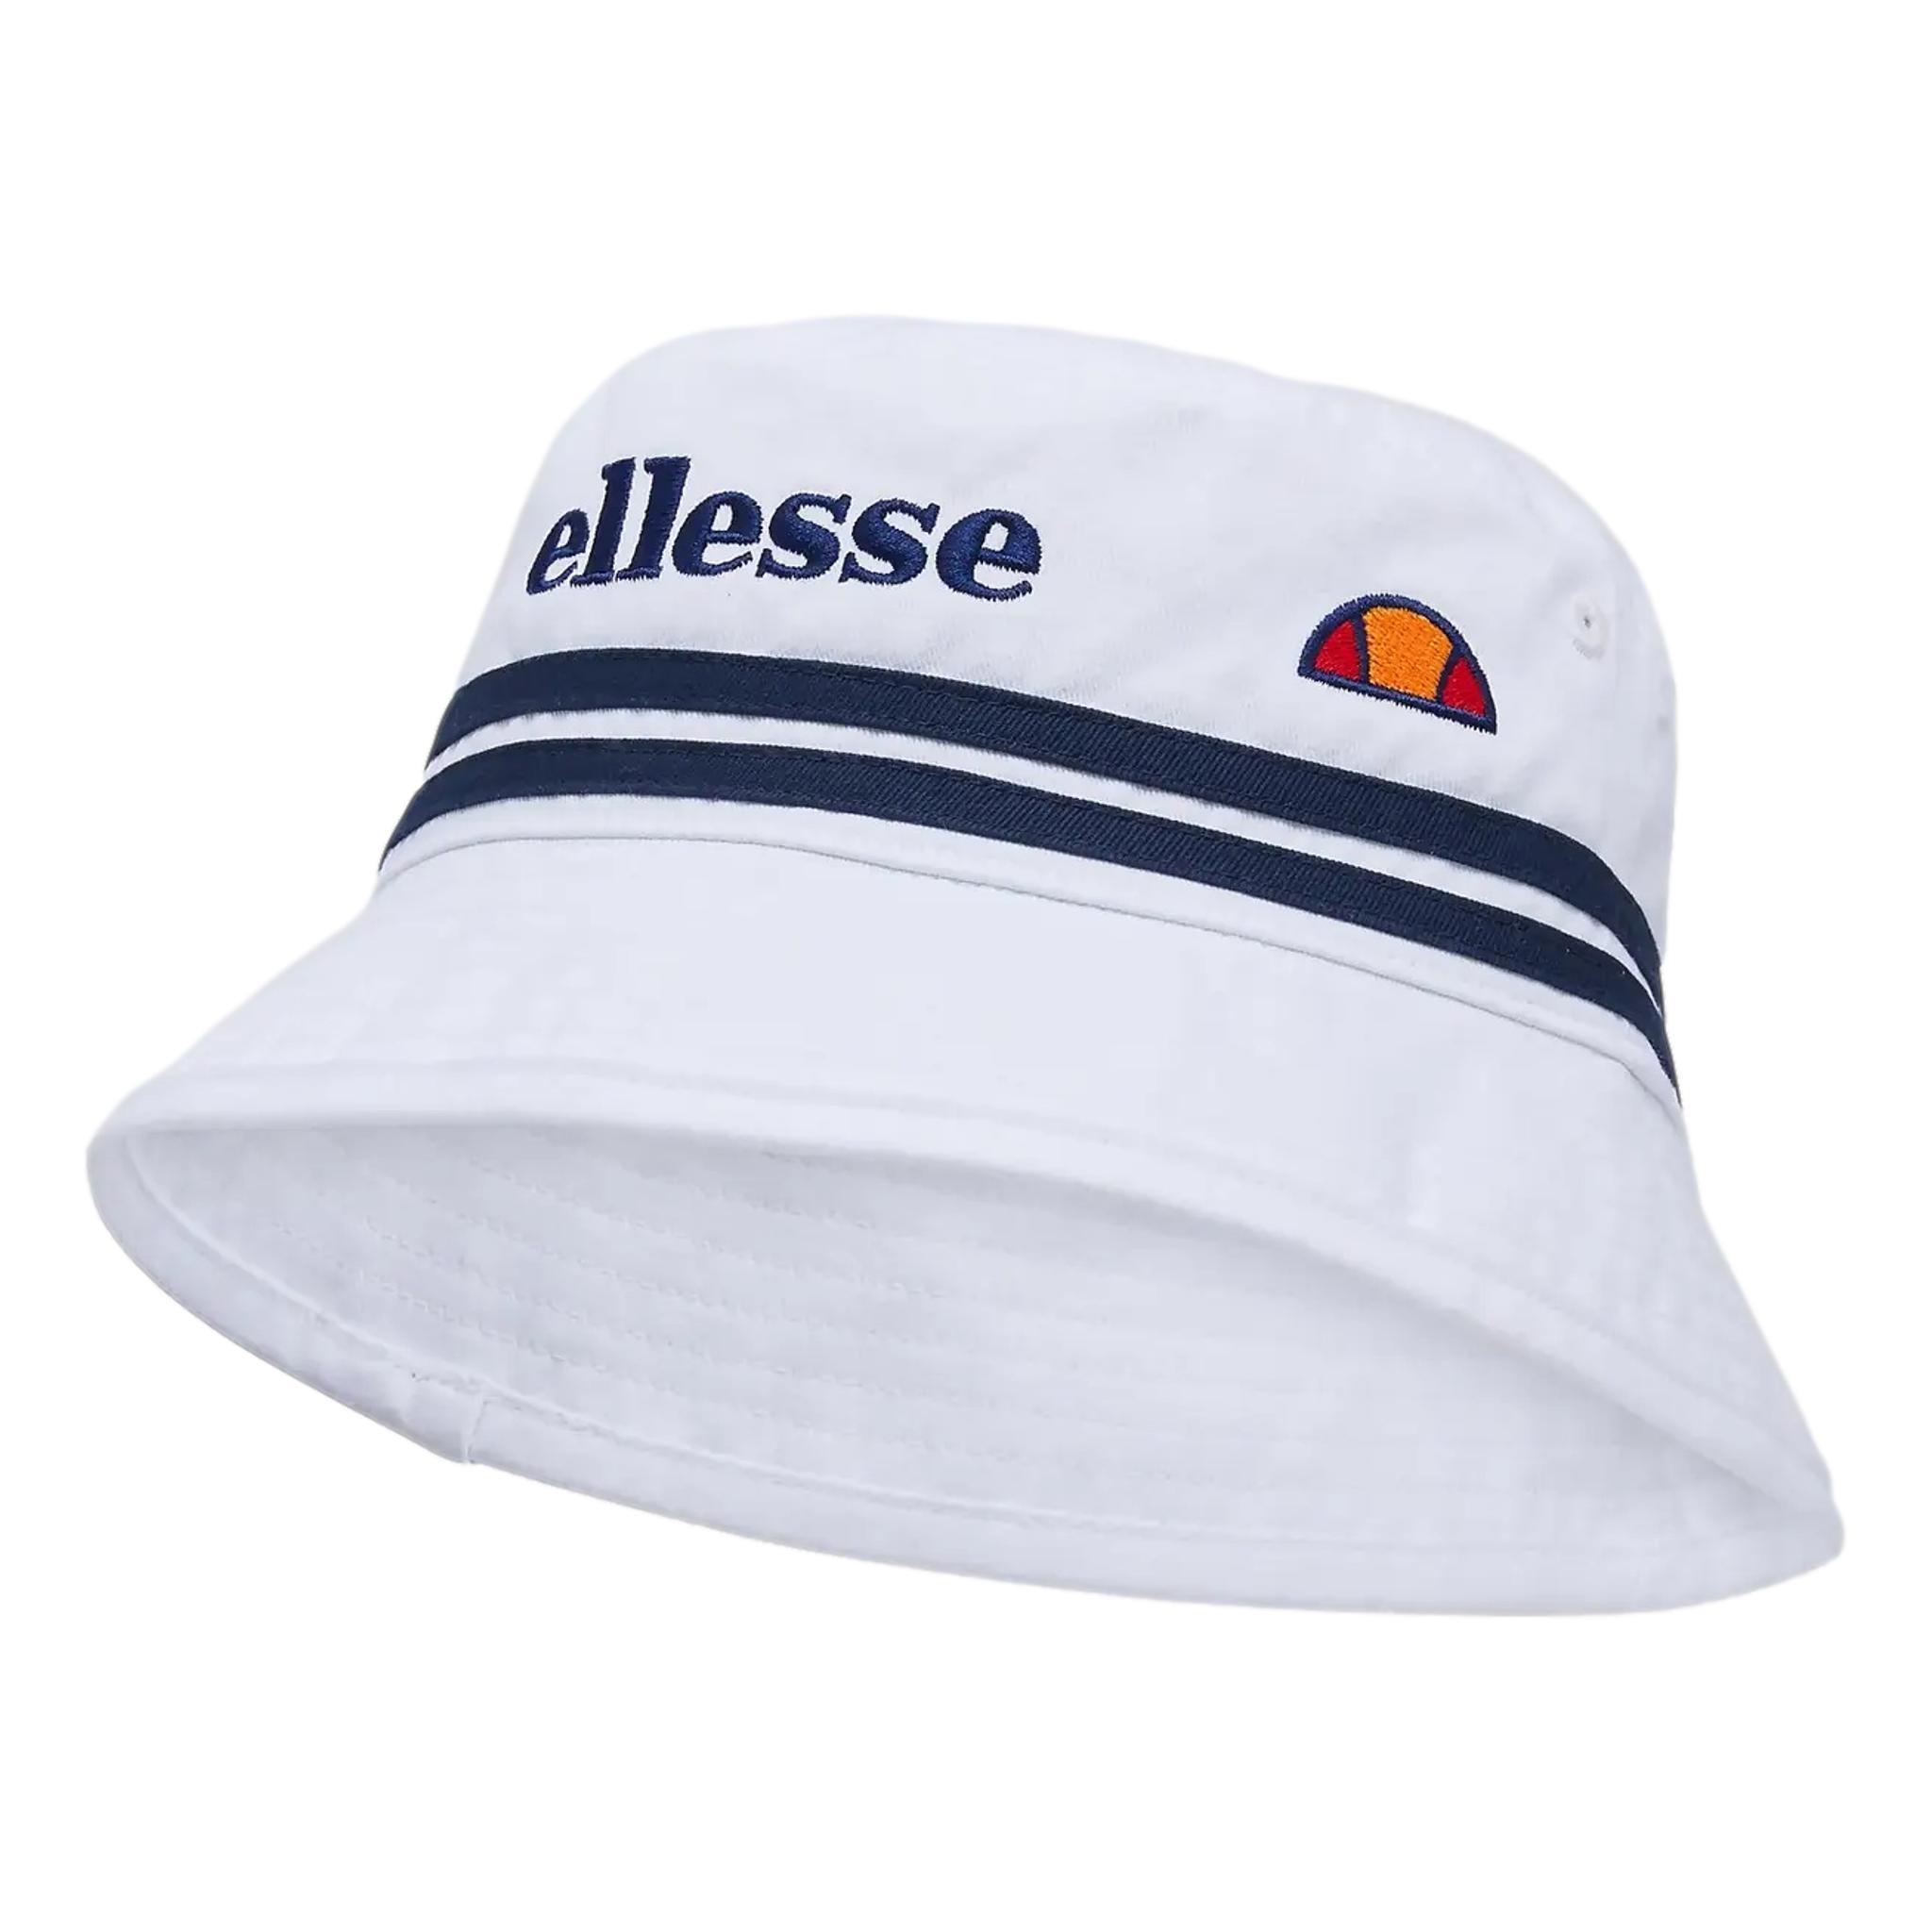 ellesse Heritage Lorenzo online Hat | Bucket One sale eBay for - Black Fashion Festival Size